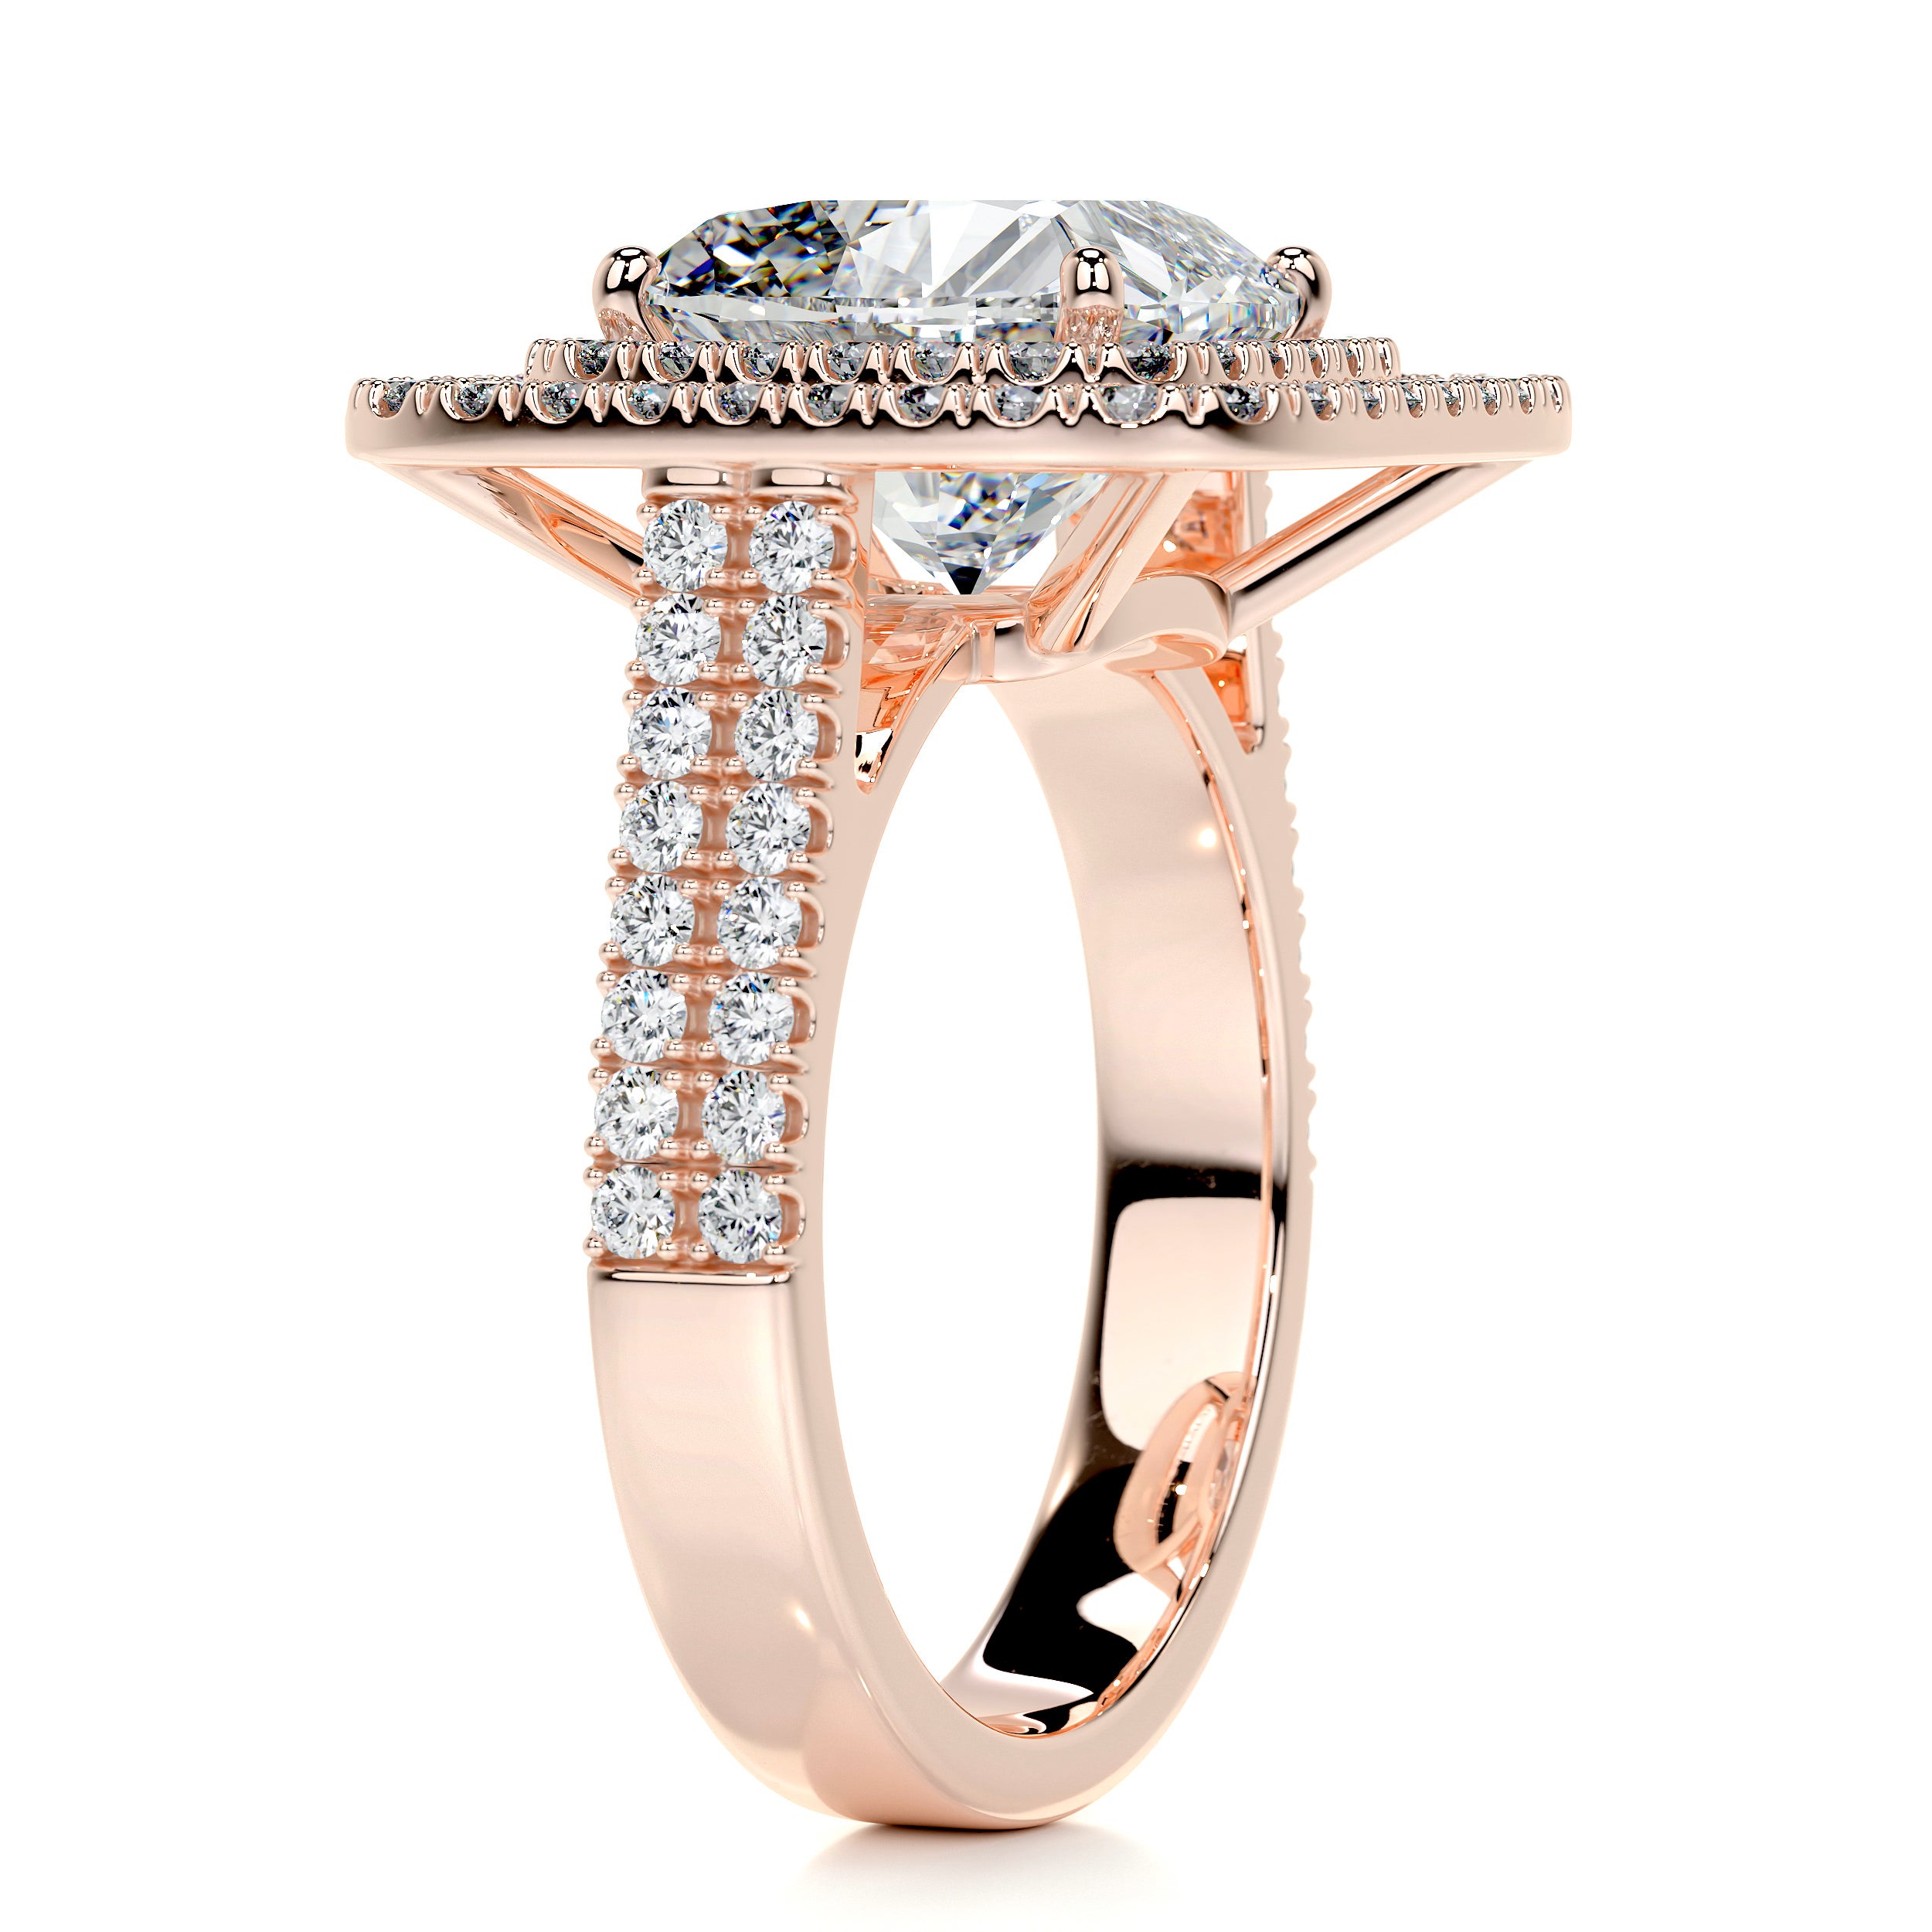 Piper Diamond Engagement Ring - 14K Rose Gold